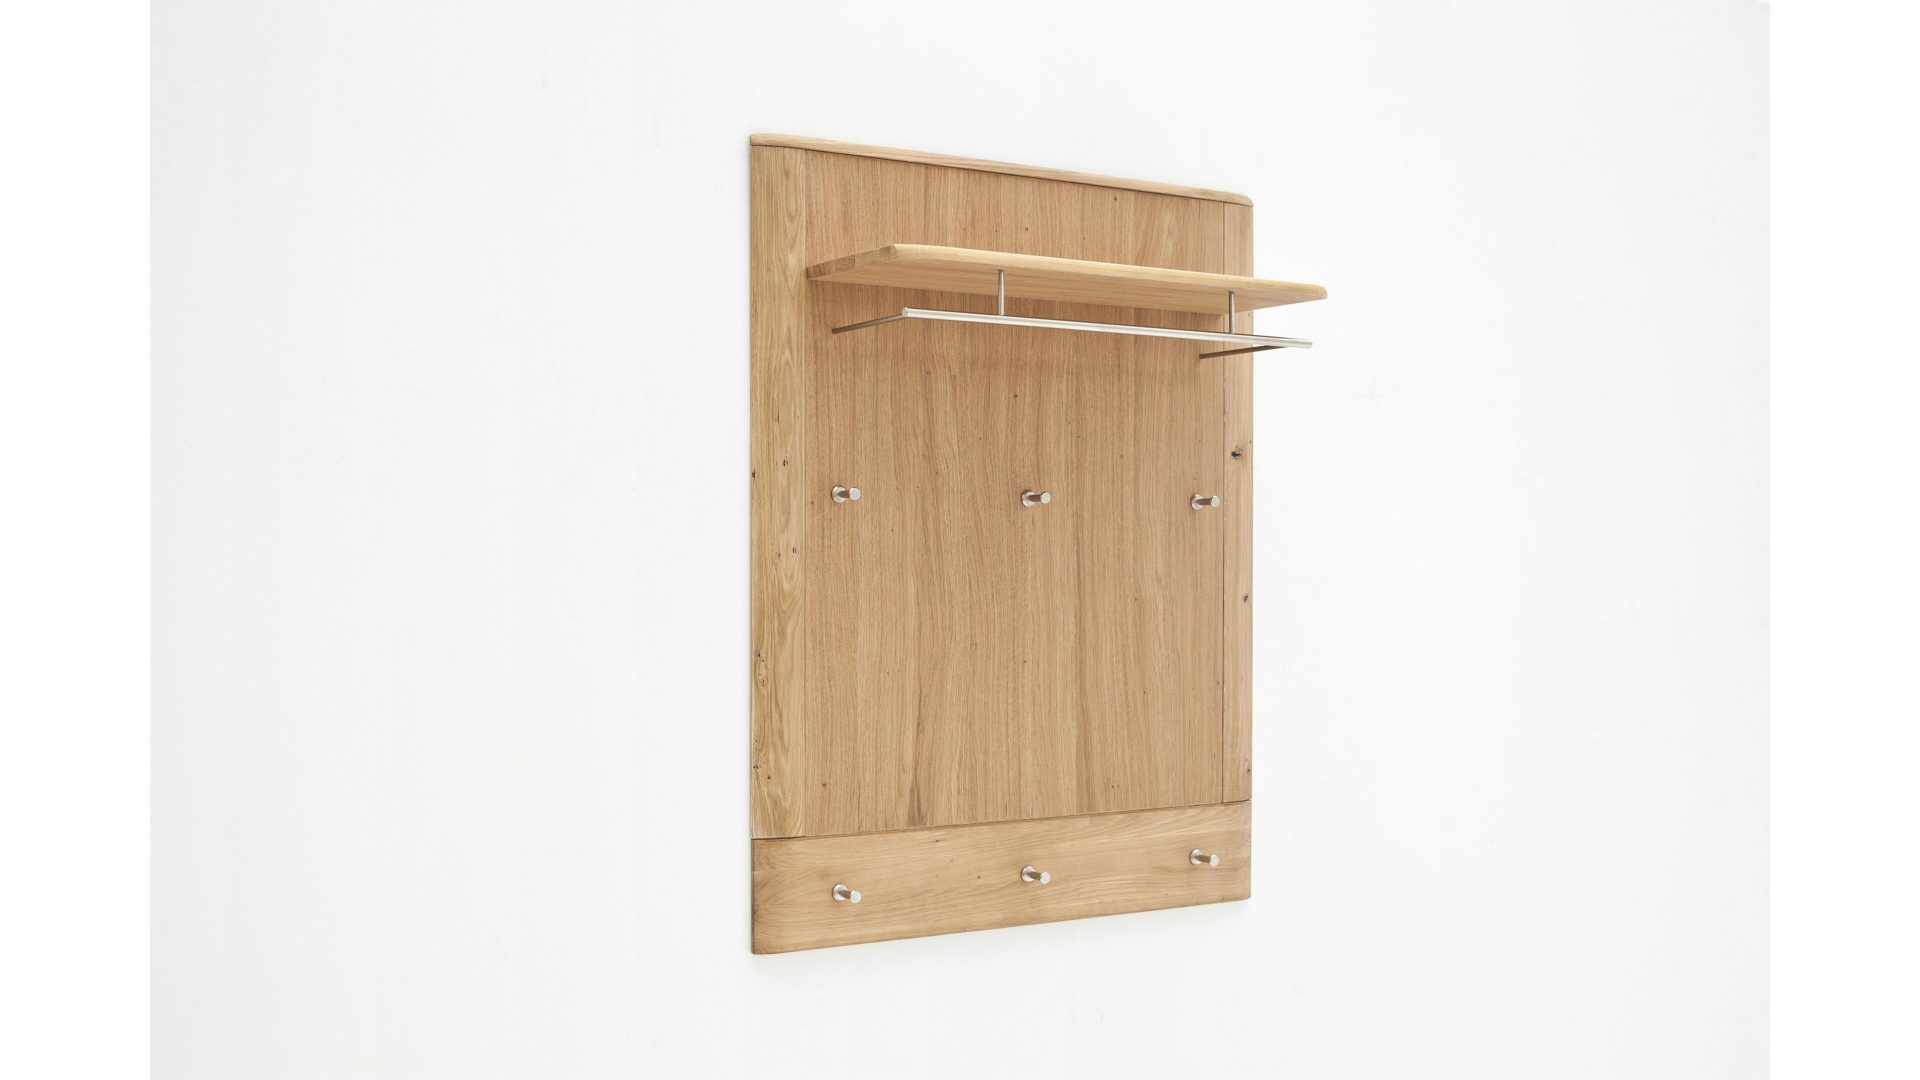 Wandgarderobe Mca furniture aus Holz in Holzfarben Wandgarderobe biancofarbene Balkeneiche – ca. 90 x 113 cm